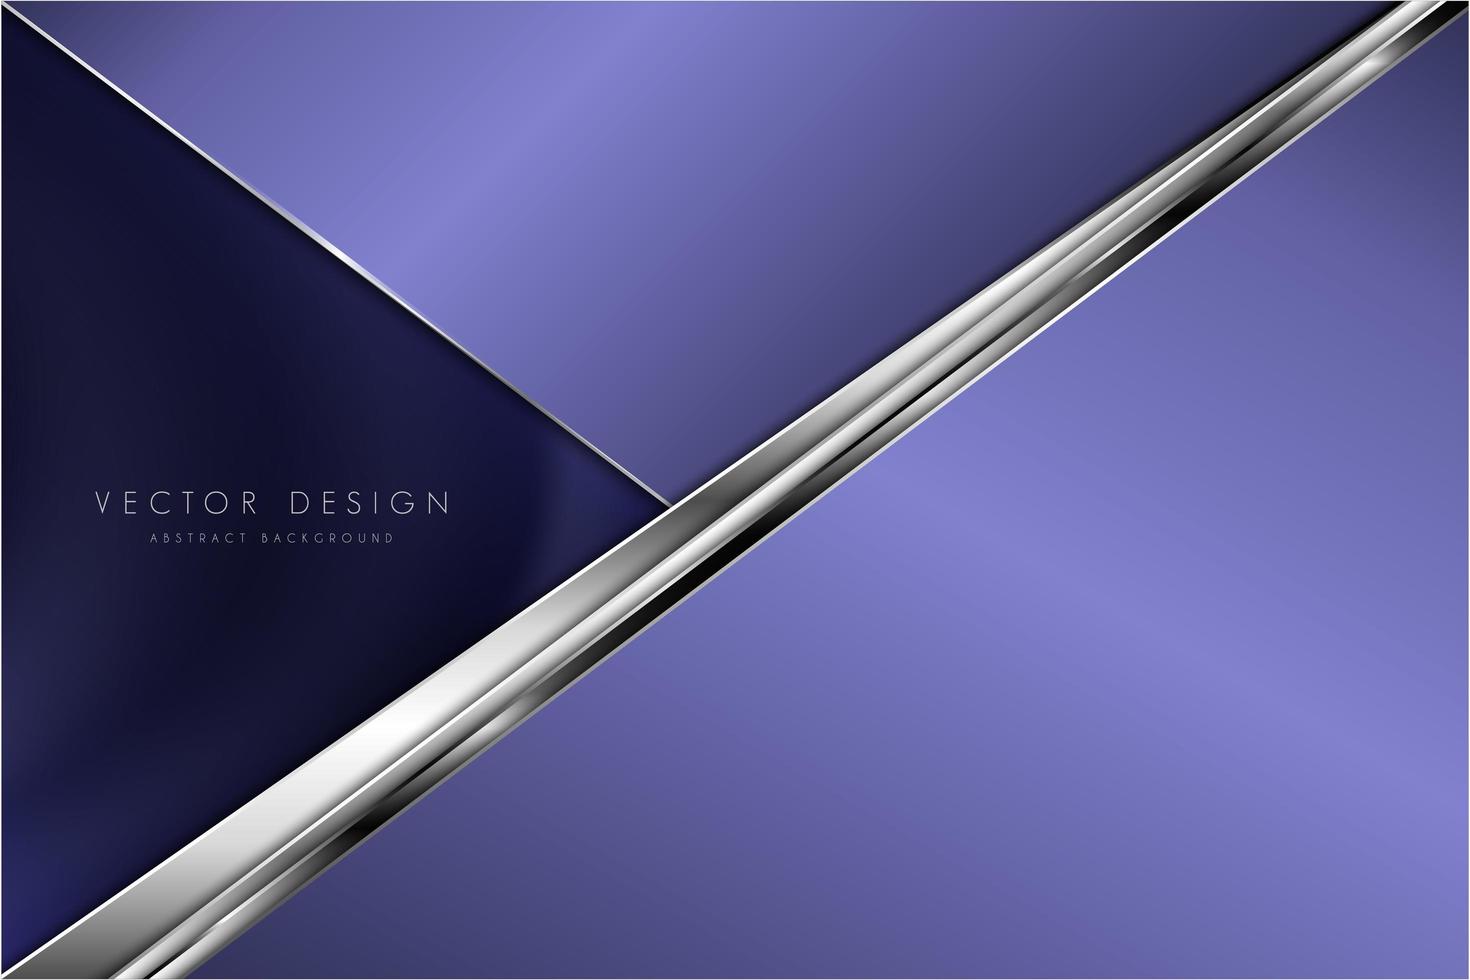 Metallic purple and silver angled layer design vector